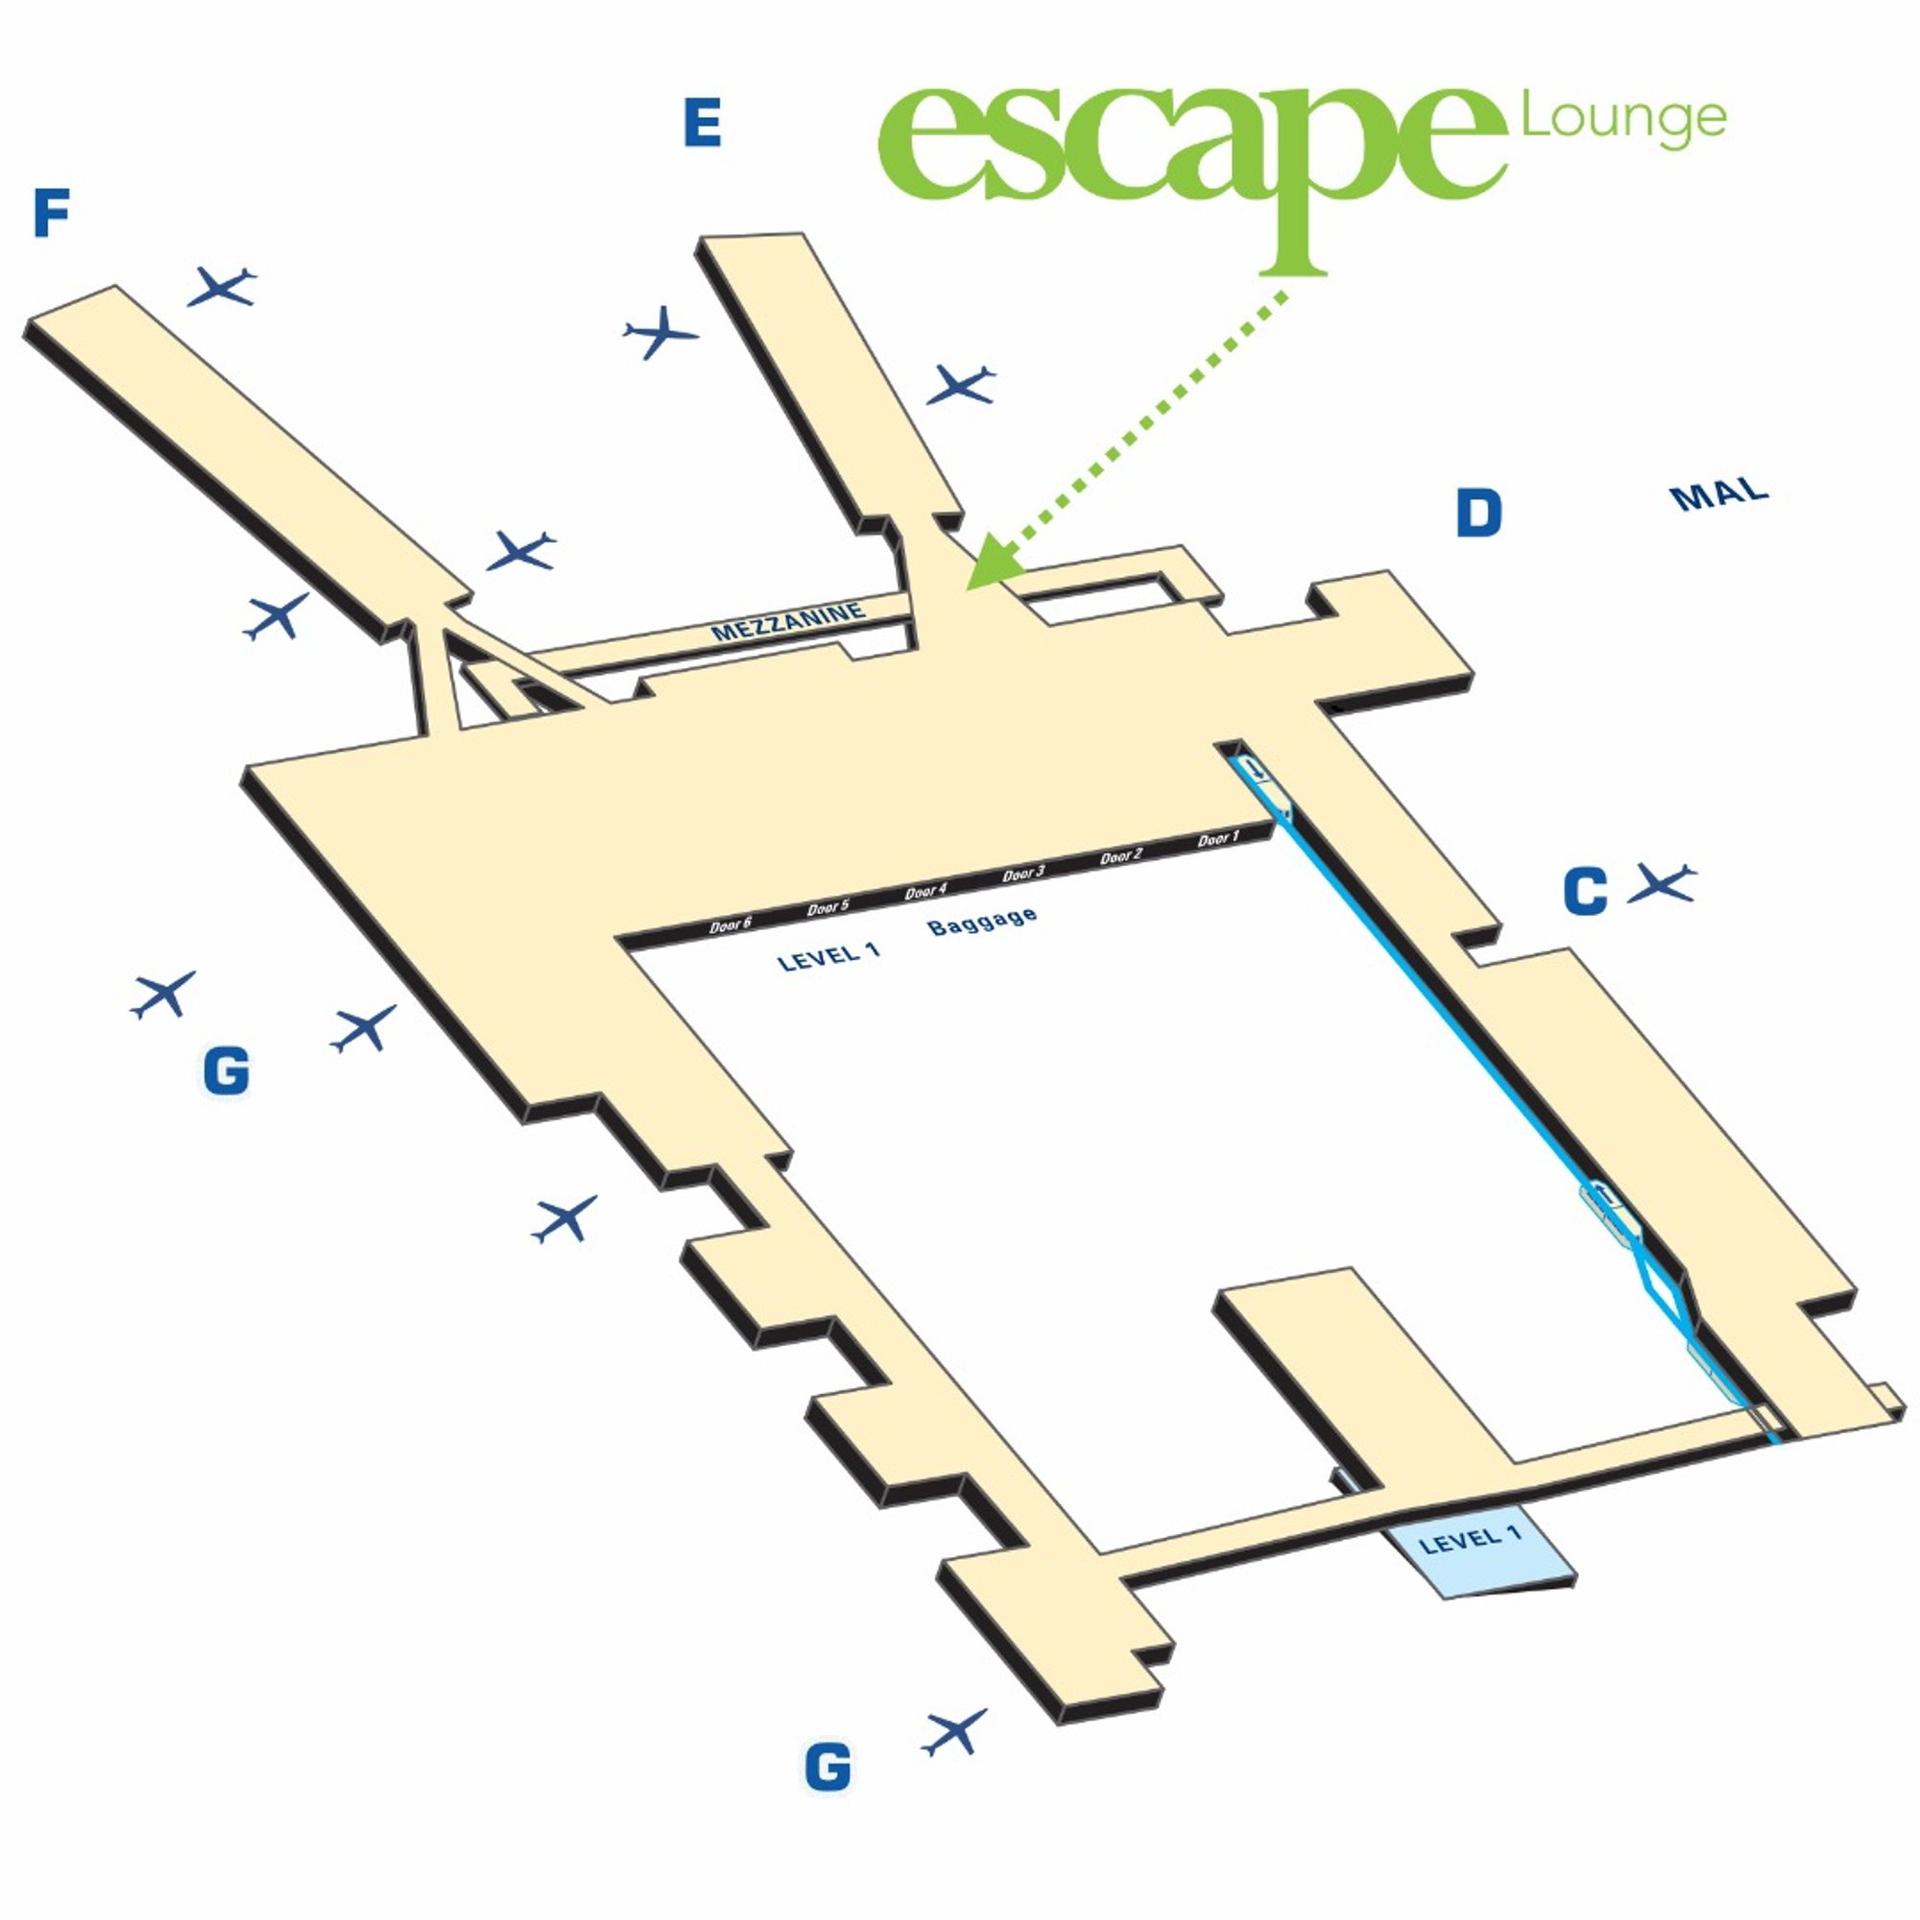 Escape Lounge image 41 of 67